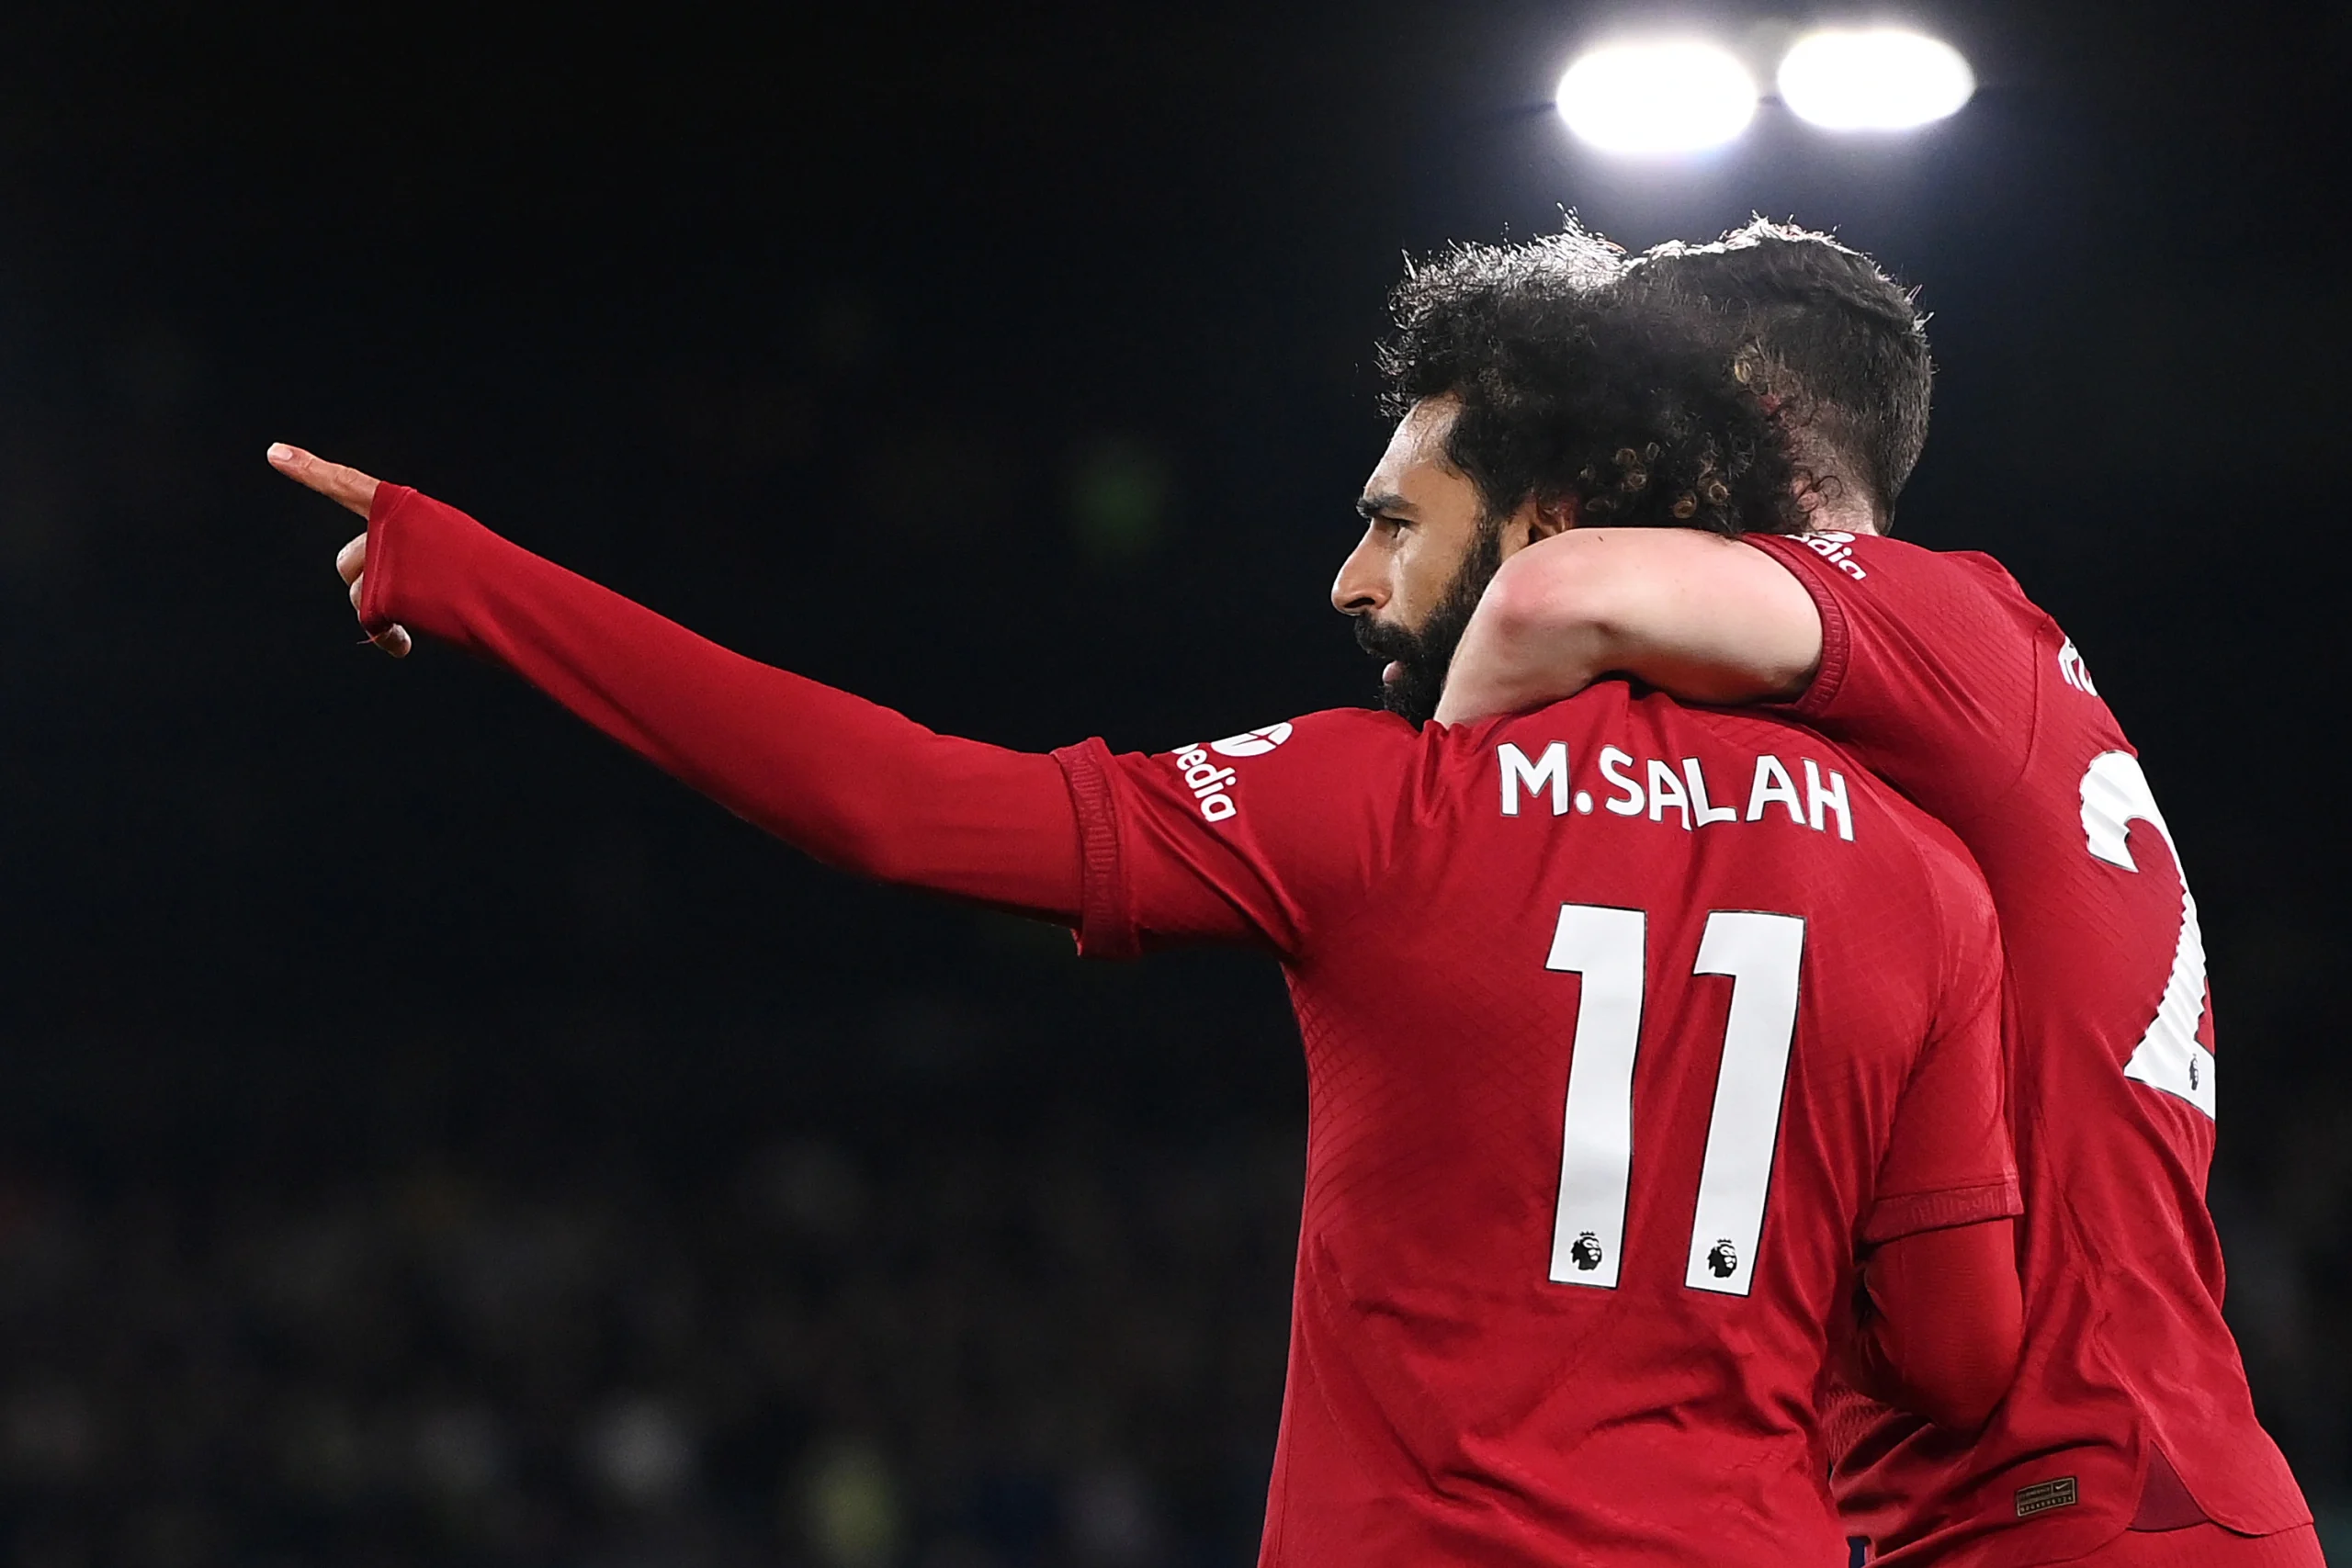 Salah celebrates scoring for Liverpool against Leeds United